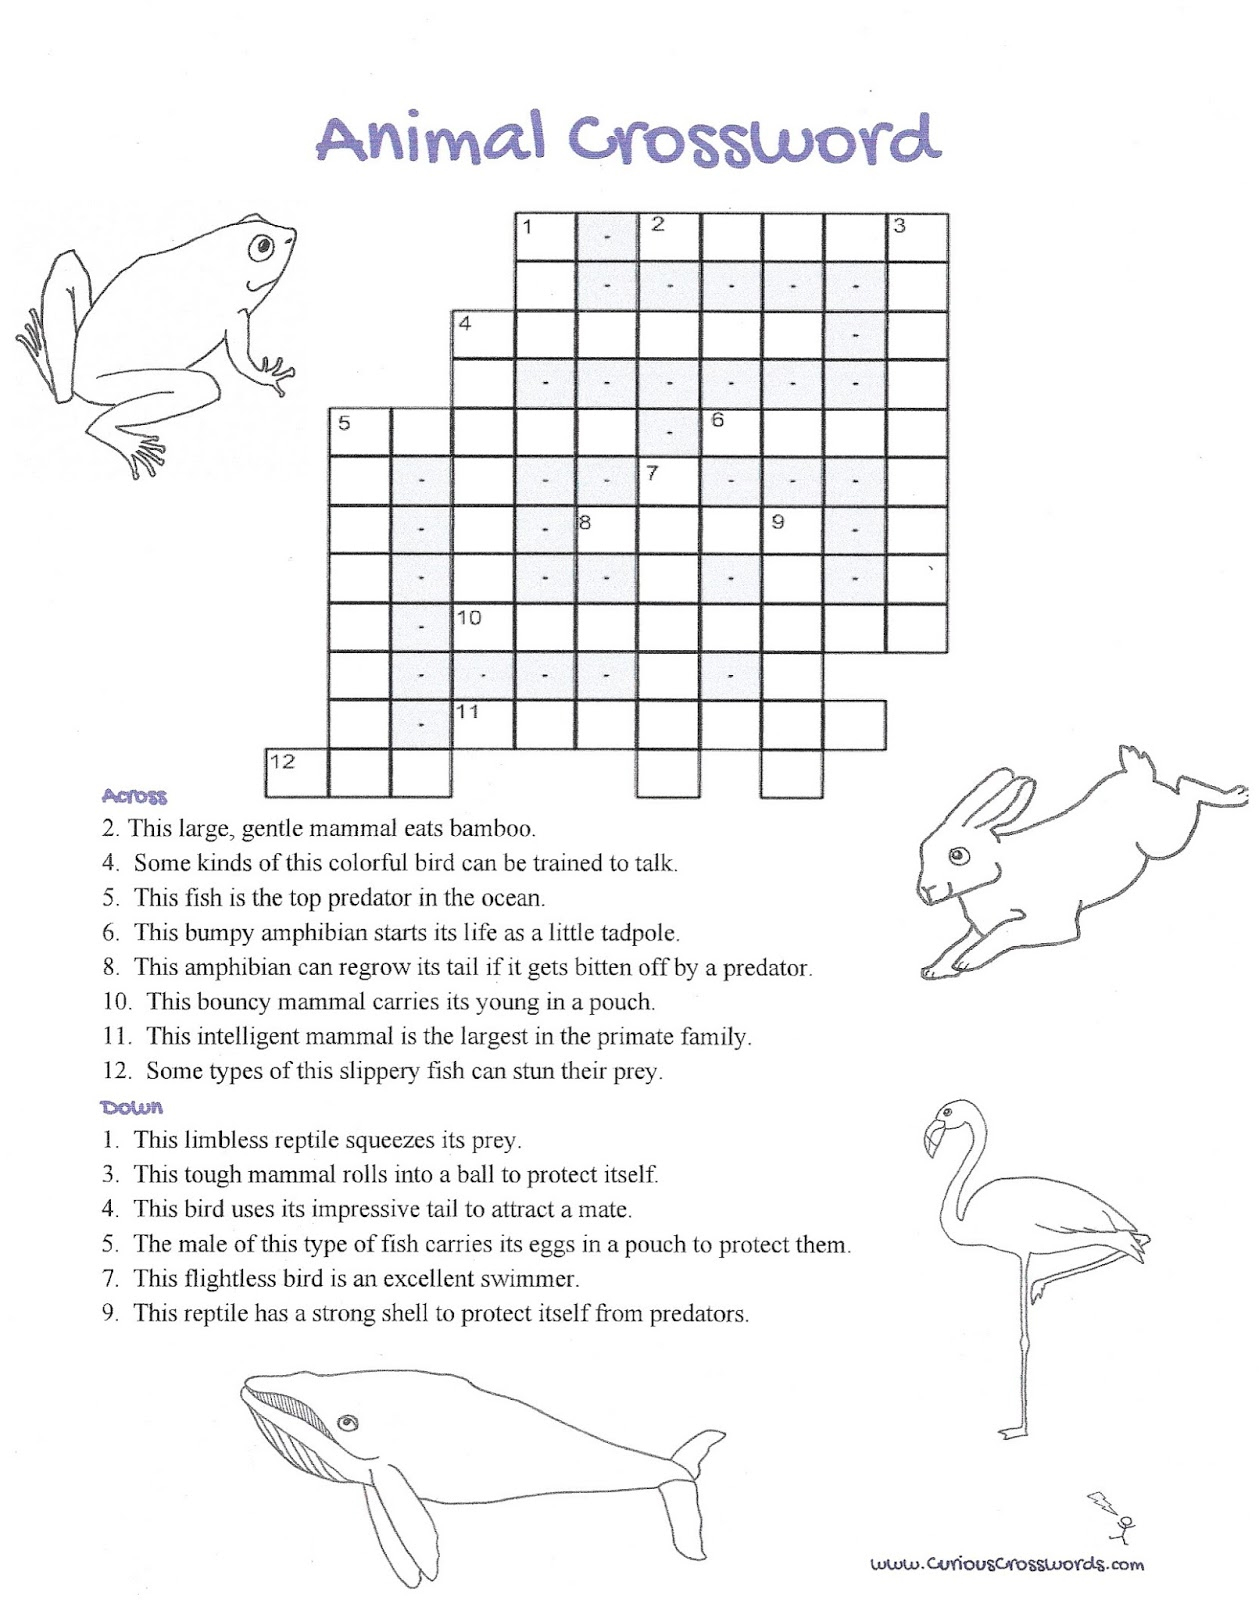 Curious Crosswords - Wildlife Crossword Puzzle Printable